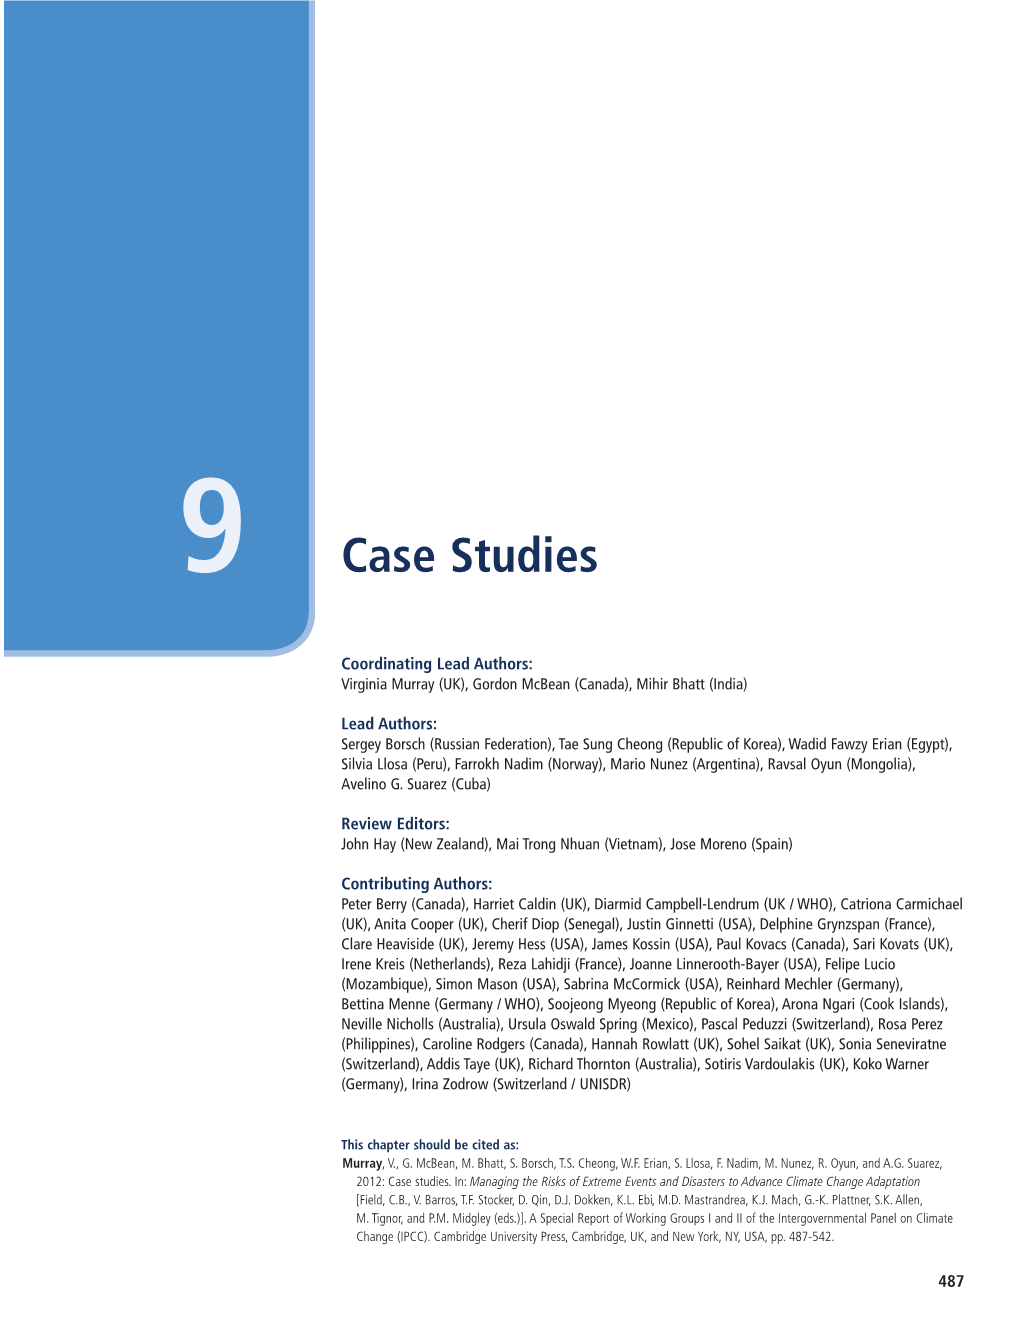 Chapter 9 (Case Studies)